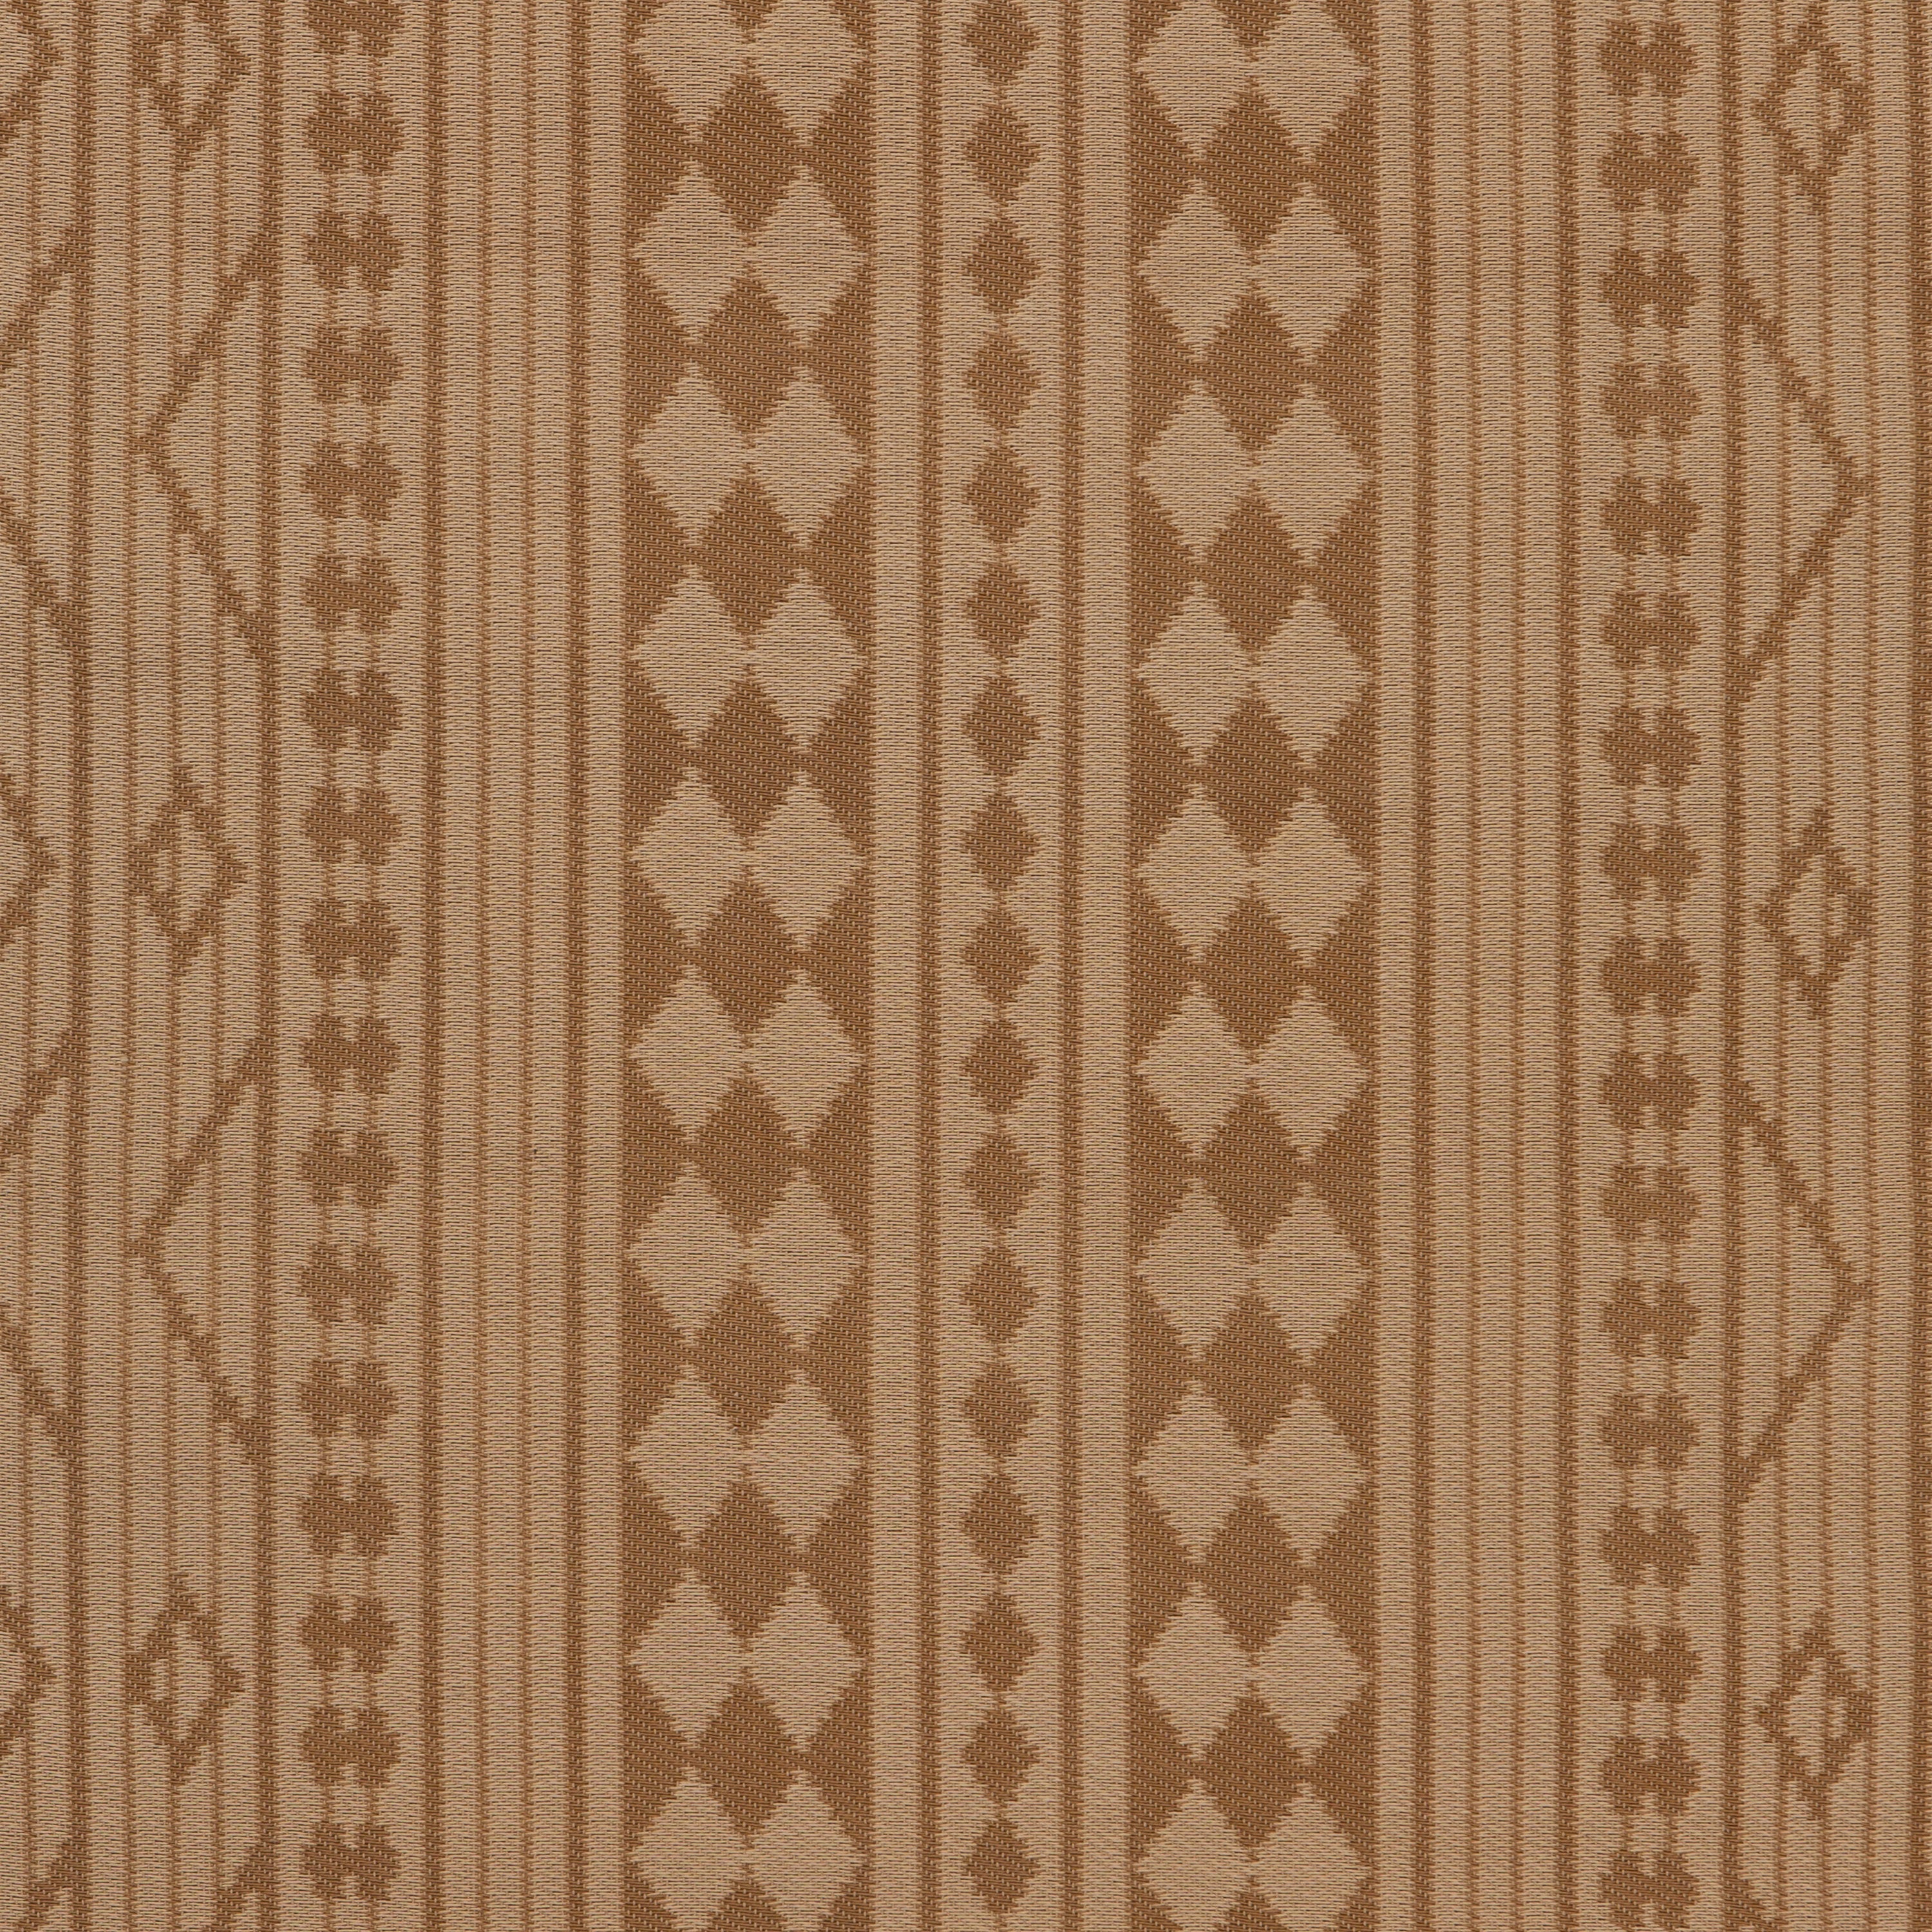 Brown Flatweave Leather Rug - 4' x 6'